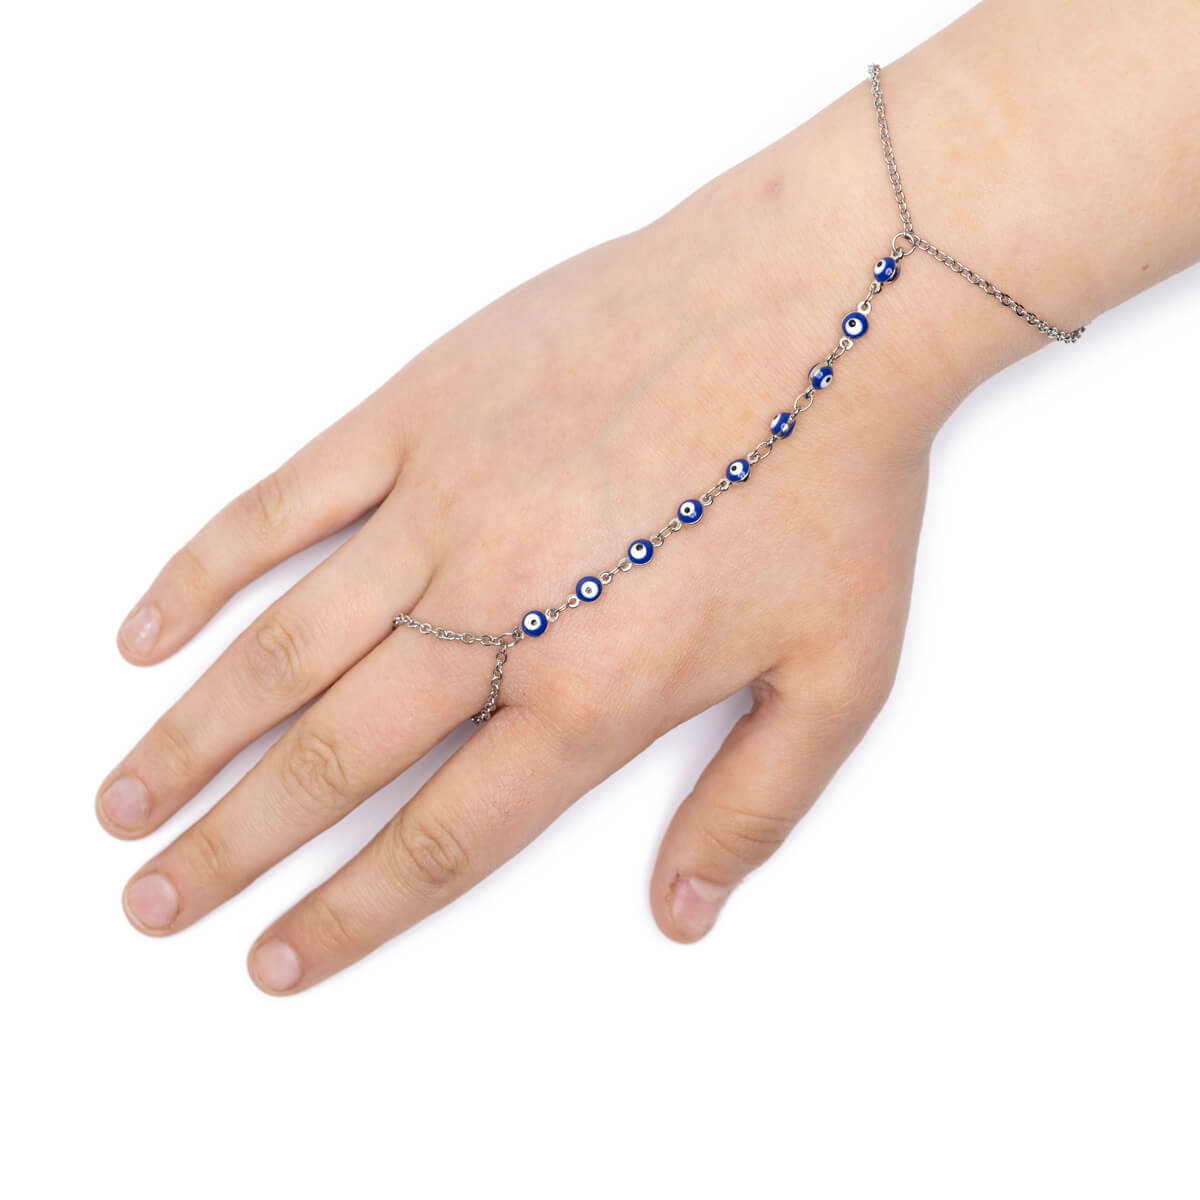 Evil eye hand-ring bracelet with chain (Steel 316L)